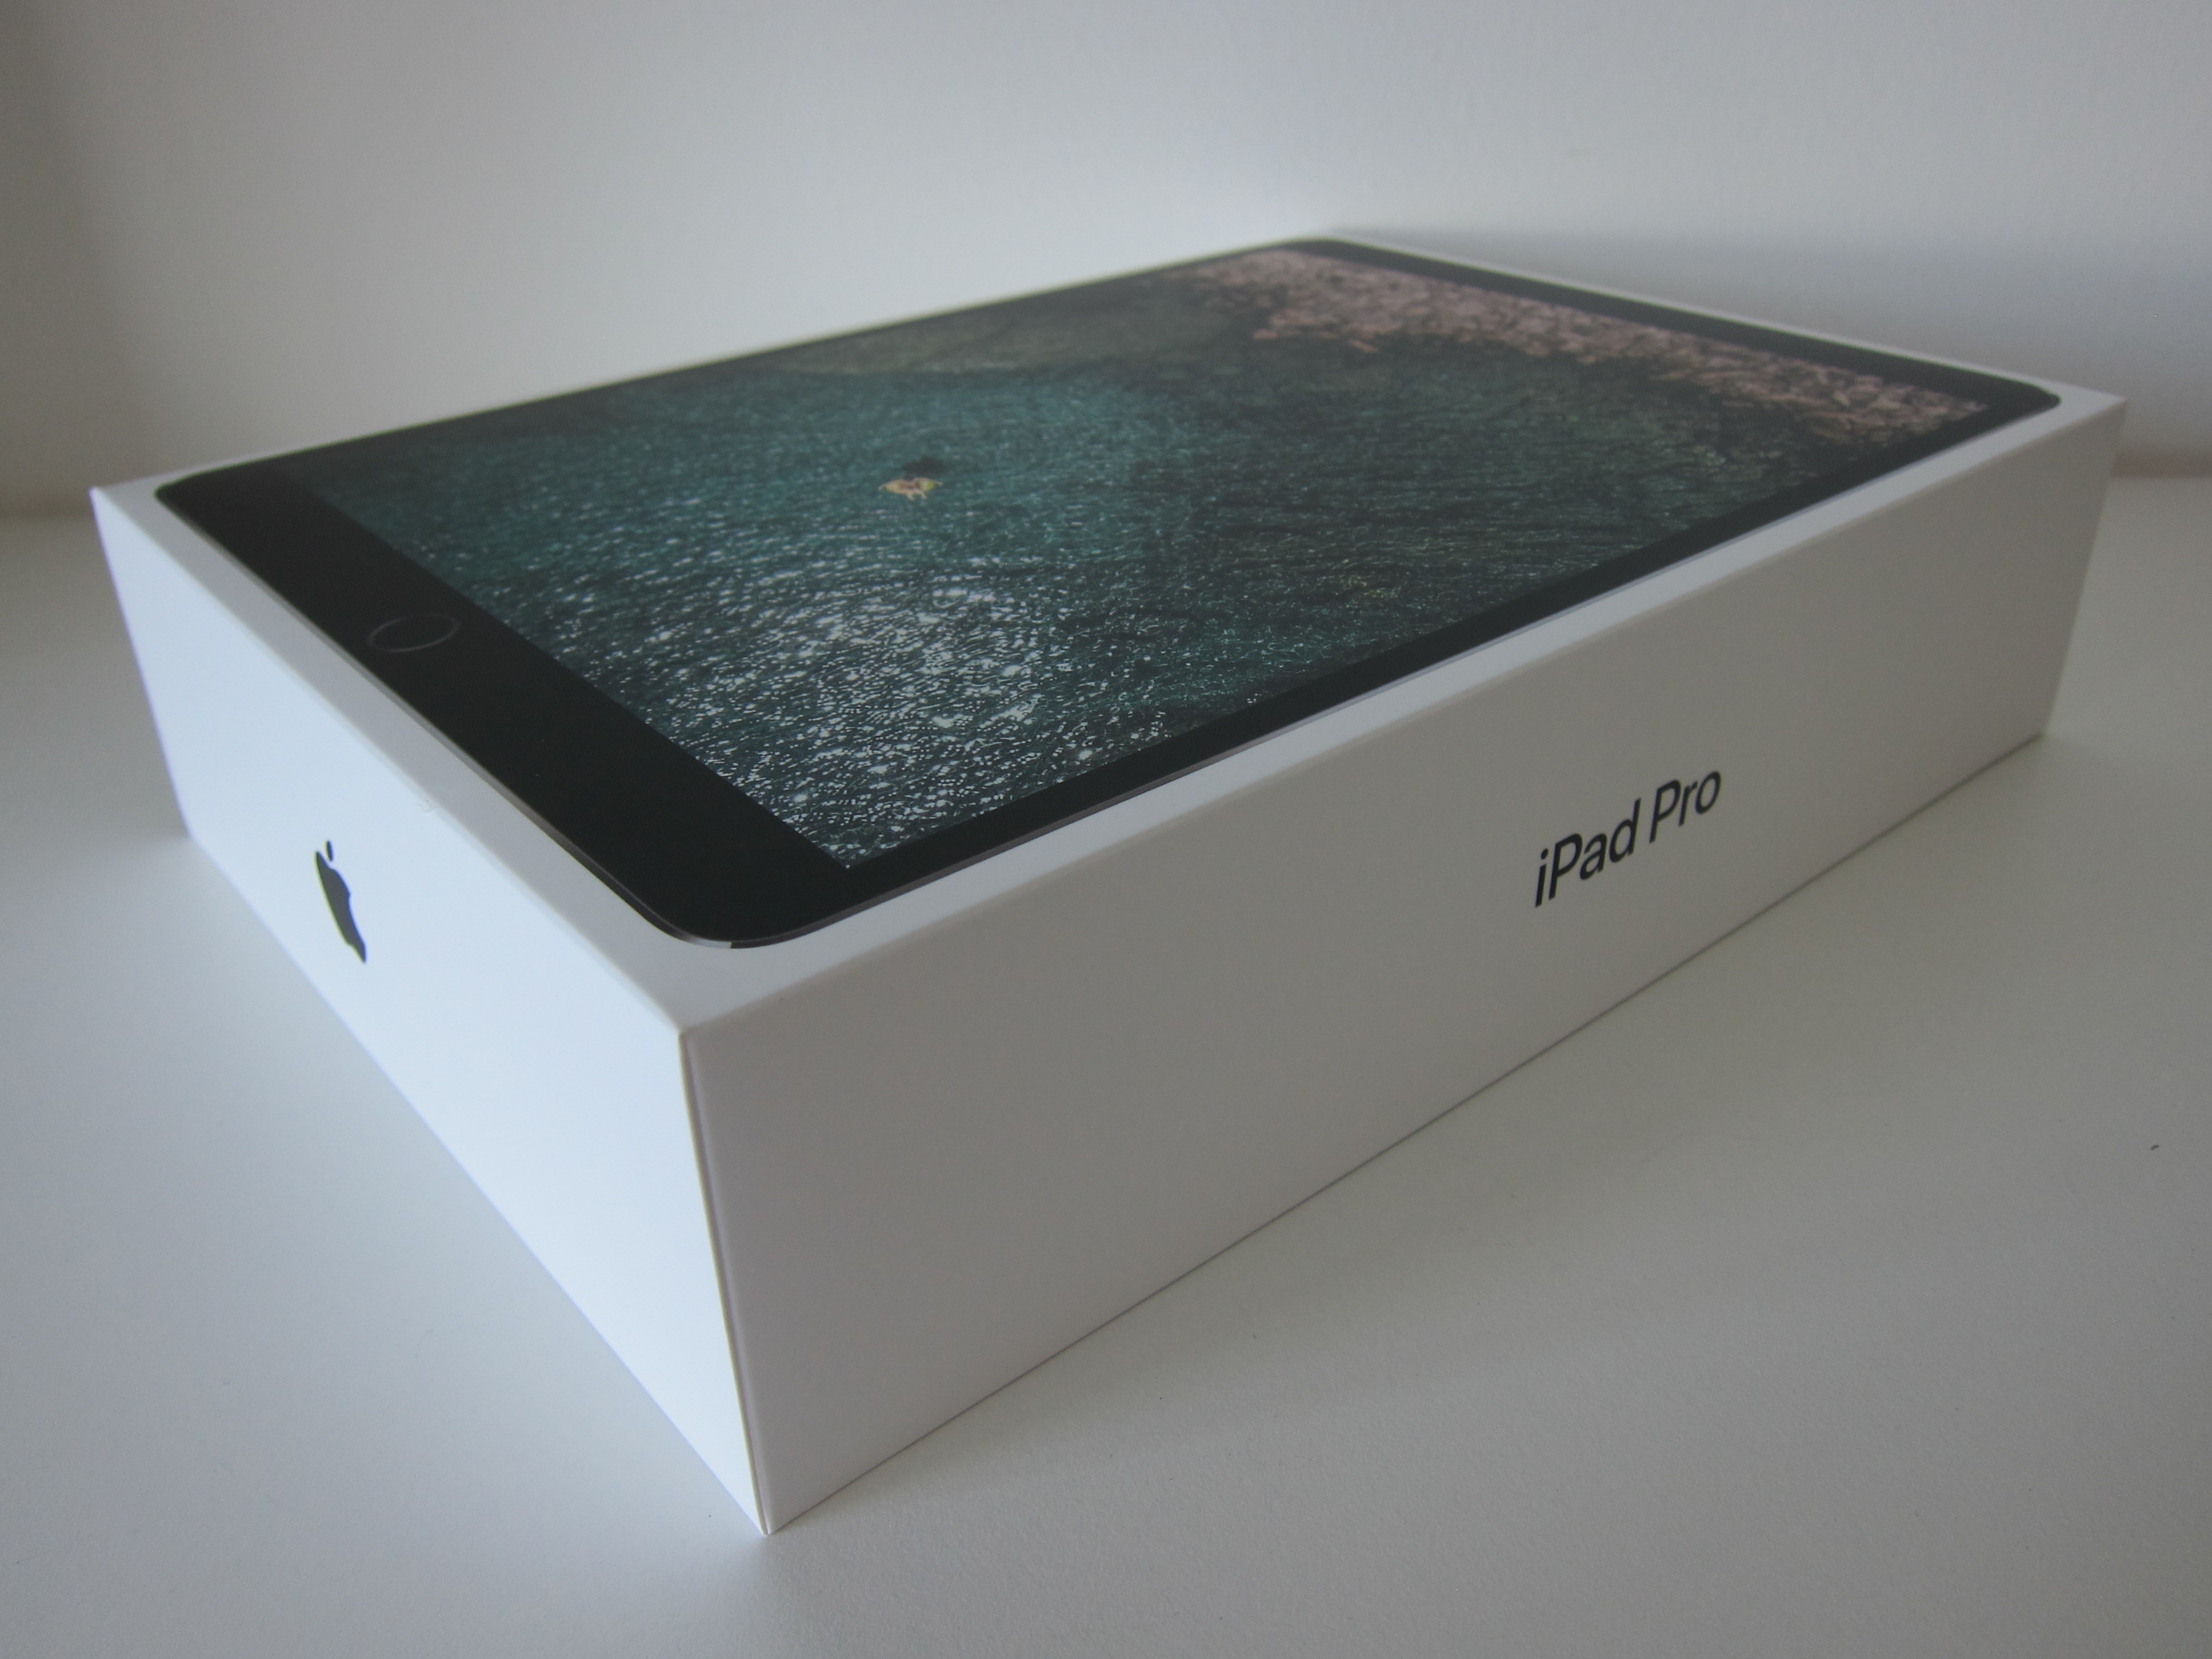 Apple iPad Pro 10.5″ (Space Grey 256GB) (Wi-Fi + Cellular) « Blog |  lesterchan.net